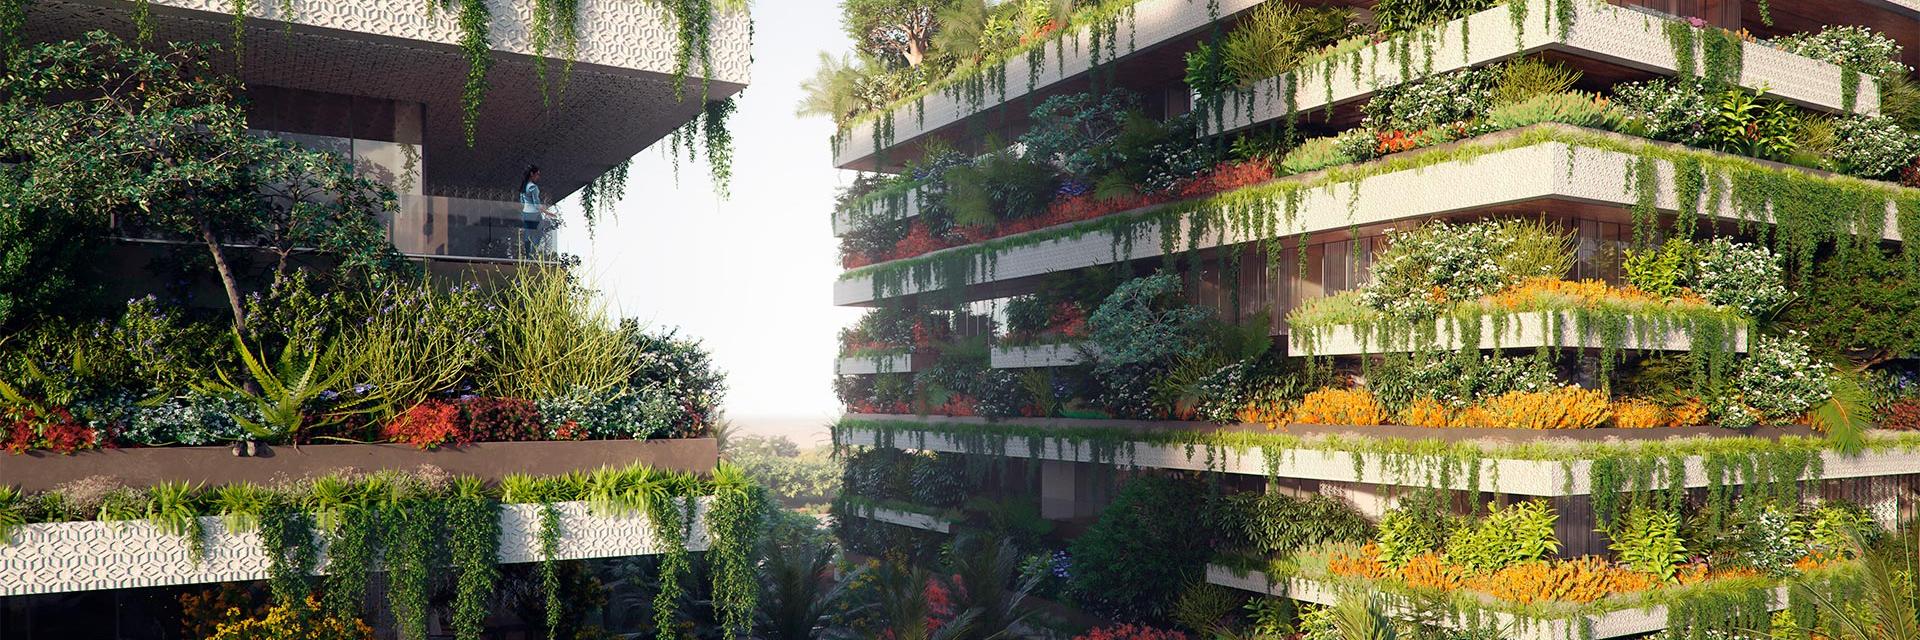 Vertical Forests designed by Stefano Boeri